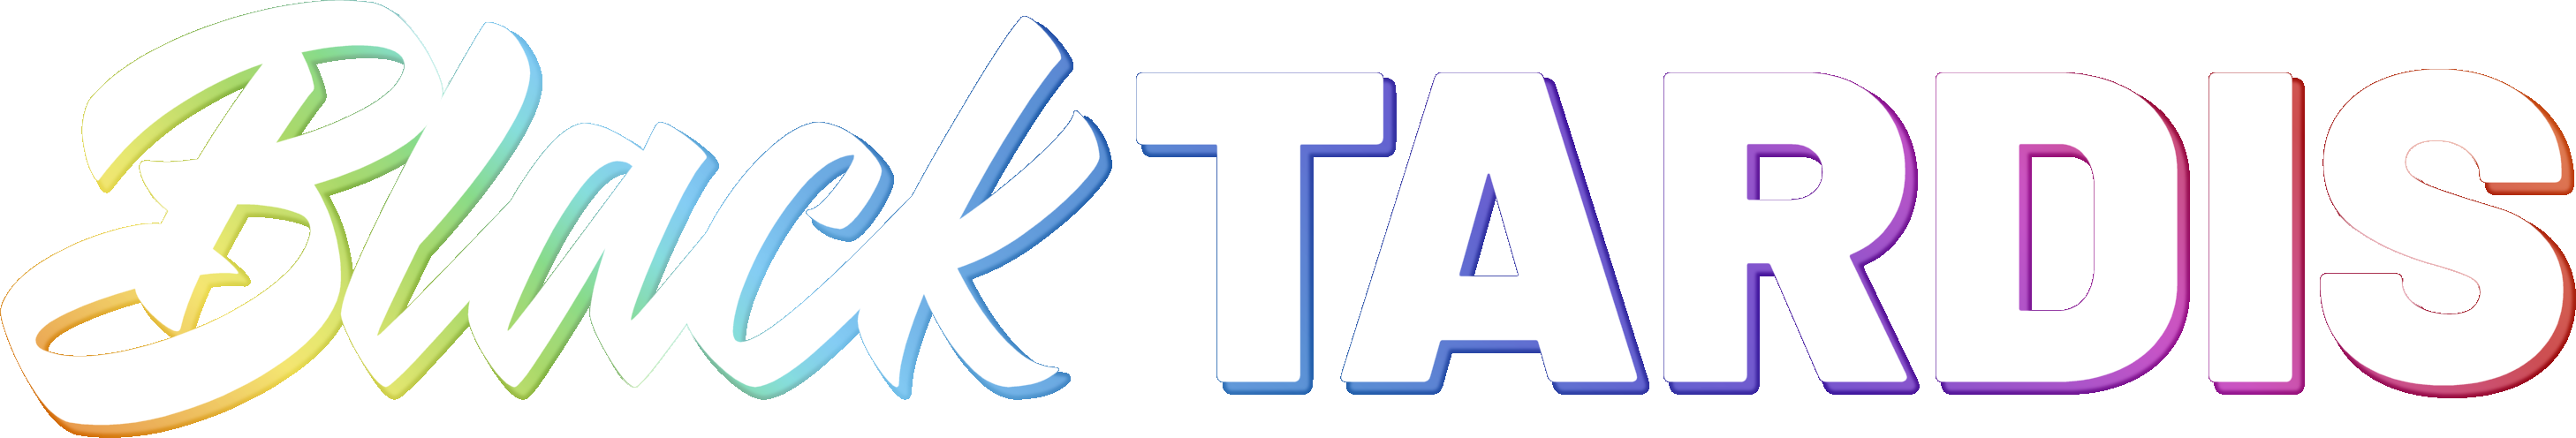 Black TARDIS Text Logo